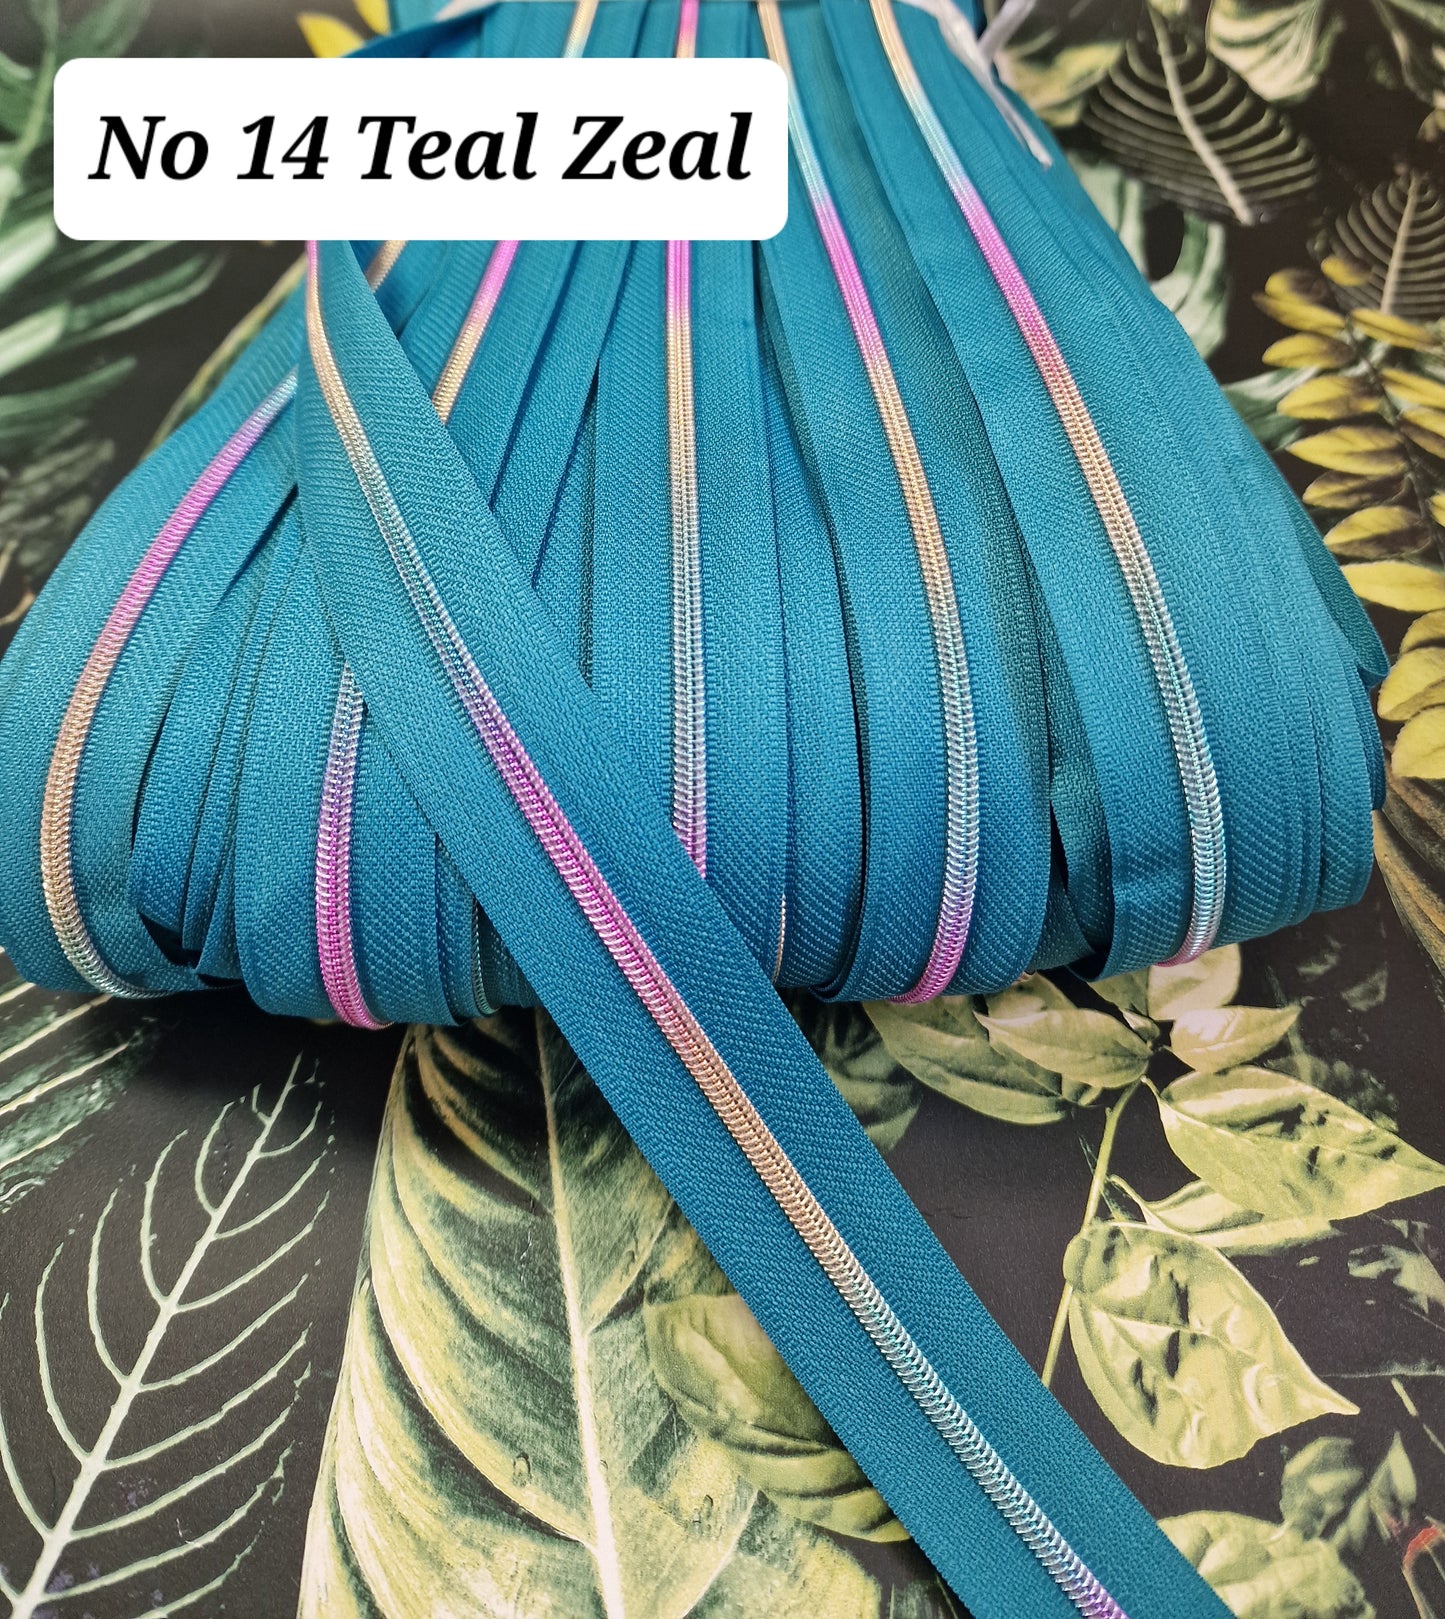 Size 3 Zipper tape TEAL ZEAL